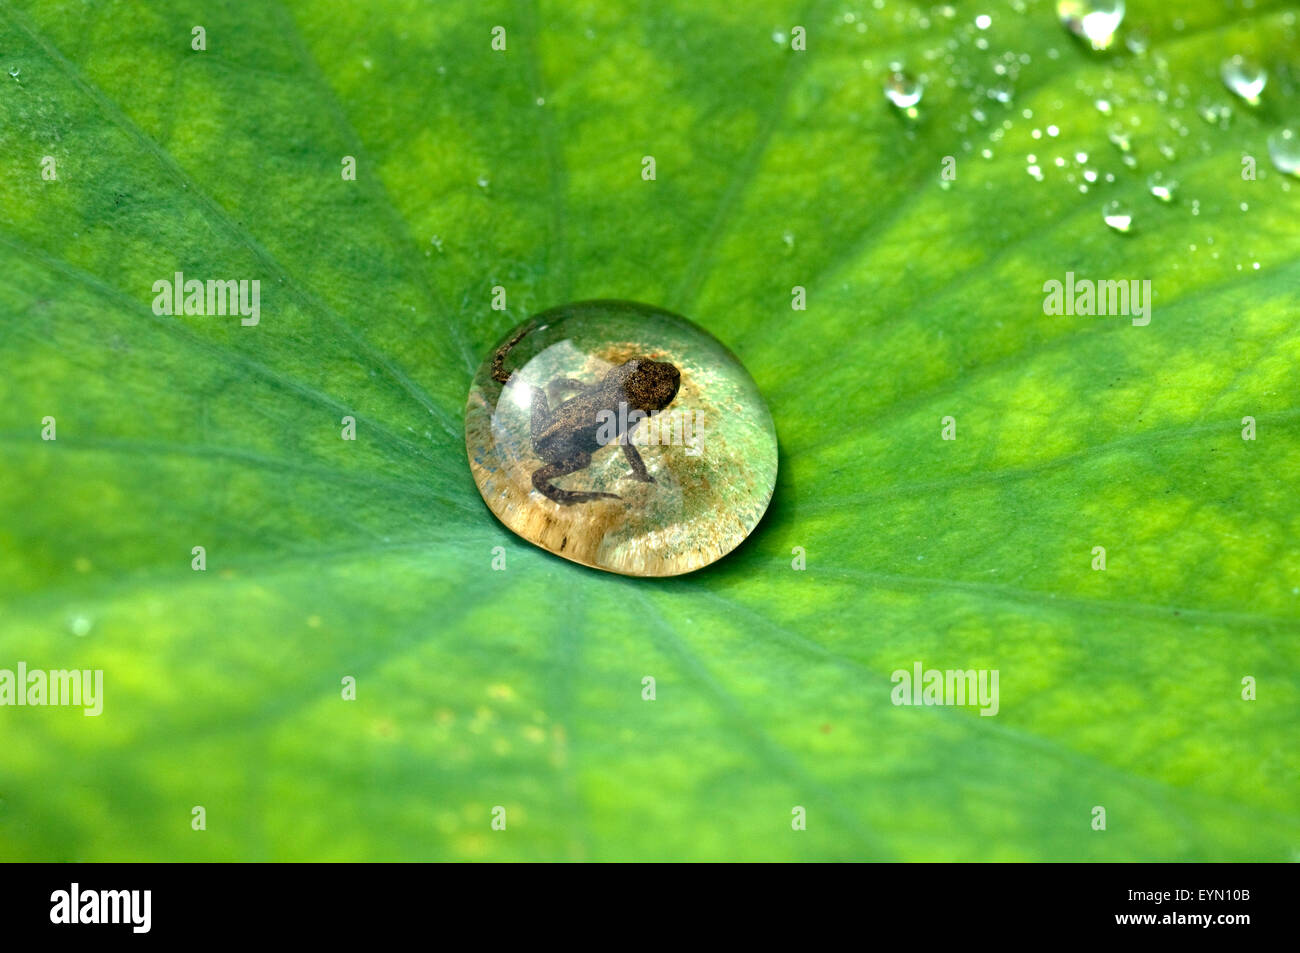 Junger Frosch, Tautropfen, Lotosblatt, Stock Photo